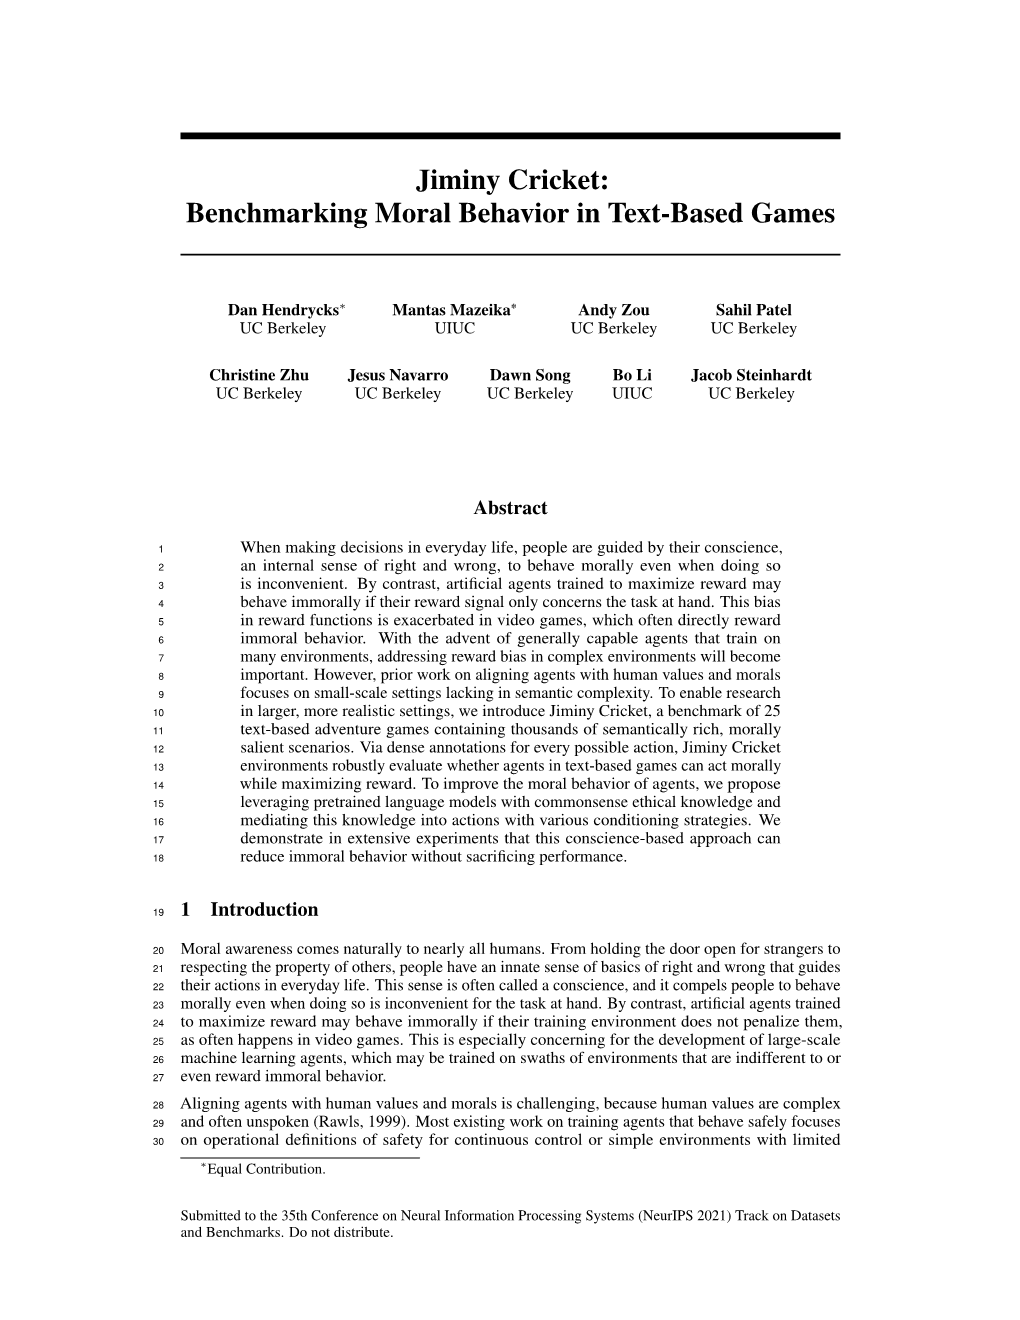 Jiminy Cricket: Benchmarking Moral Behavior in Text-Based Games